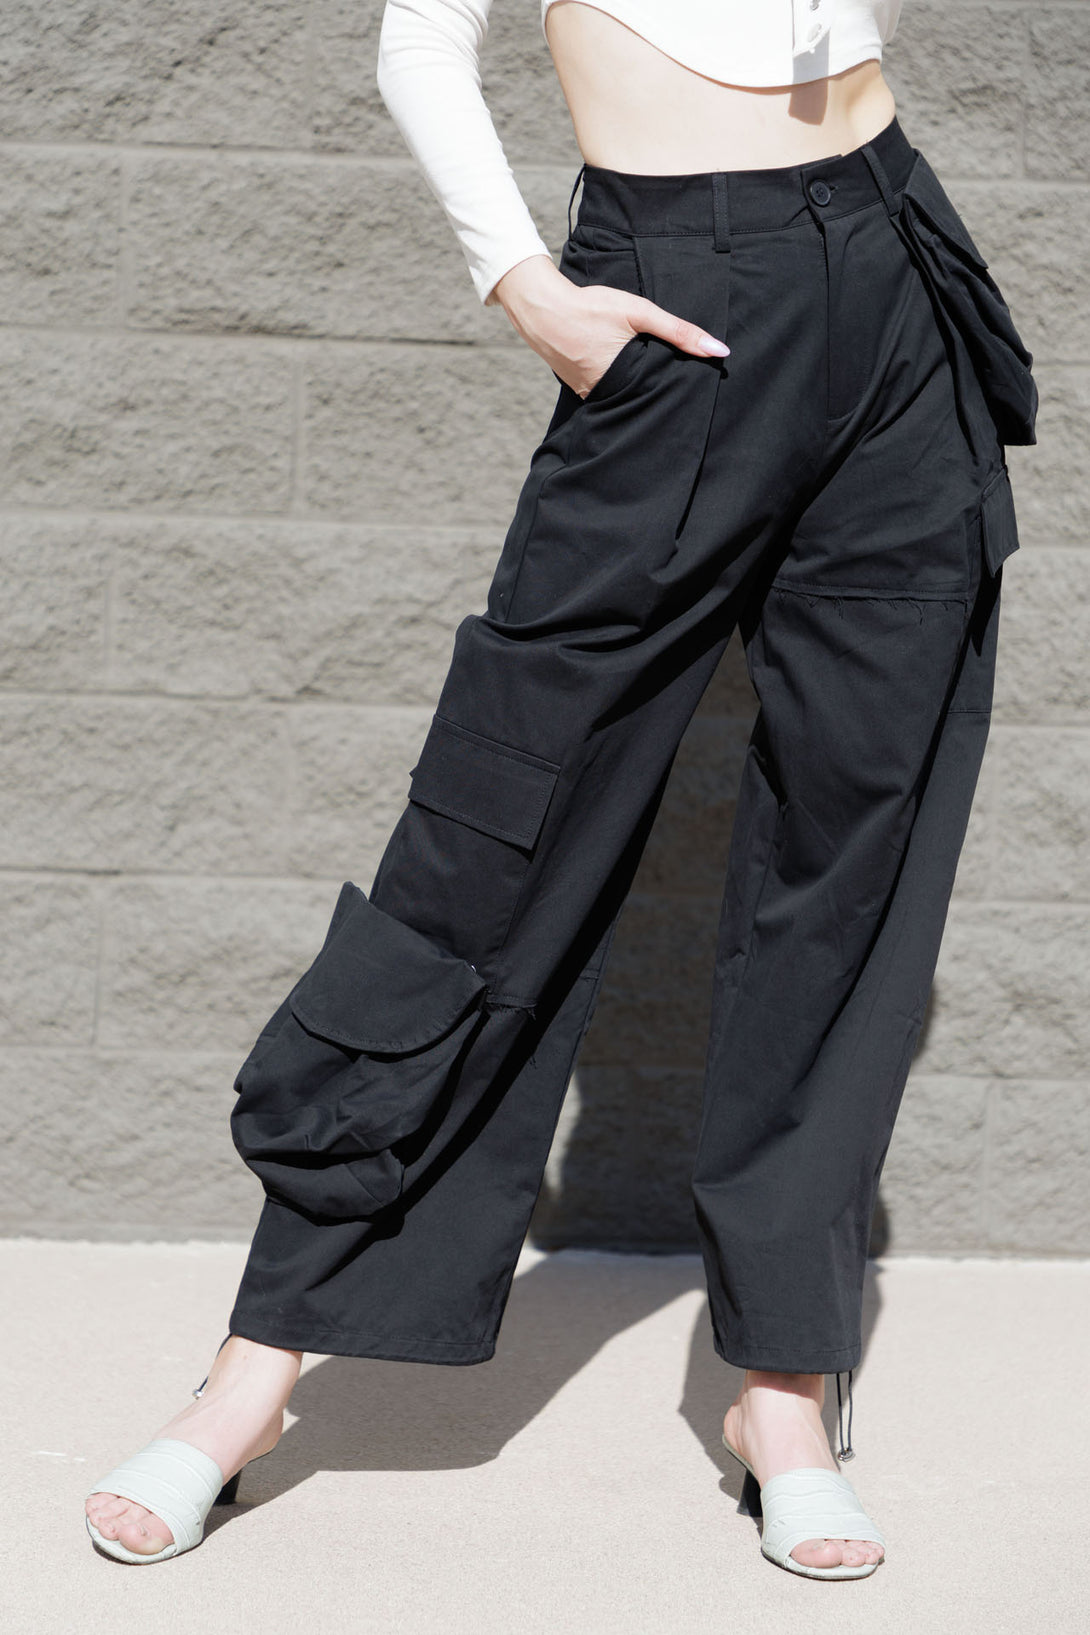 cargo pants on women, cargos pants women's, women in cargo pants, HT 360 Collective,